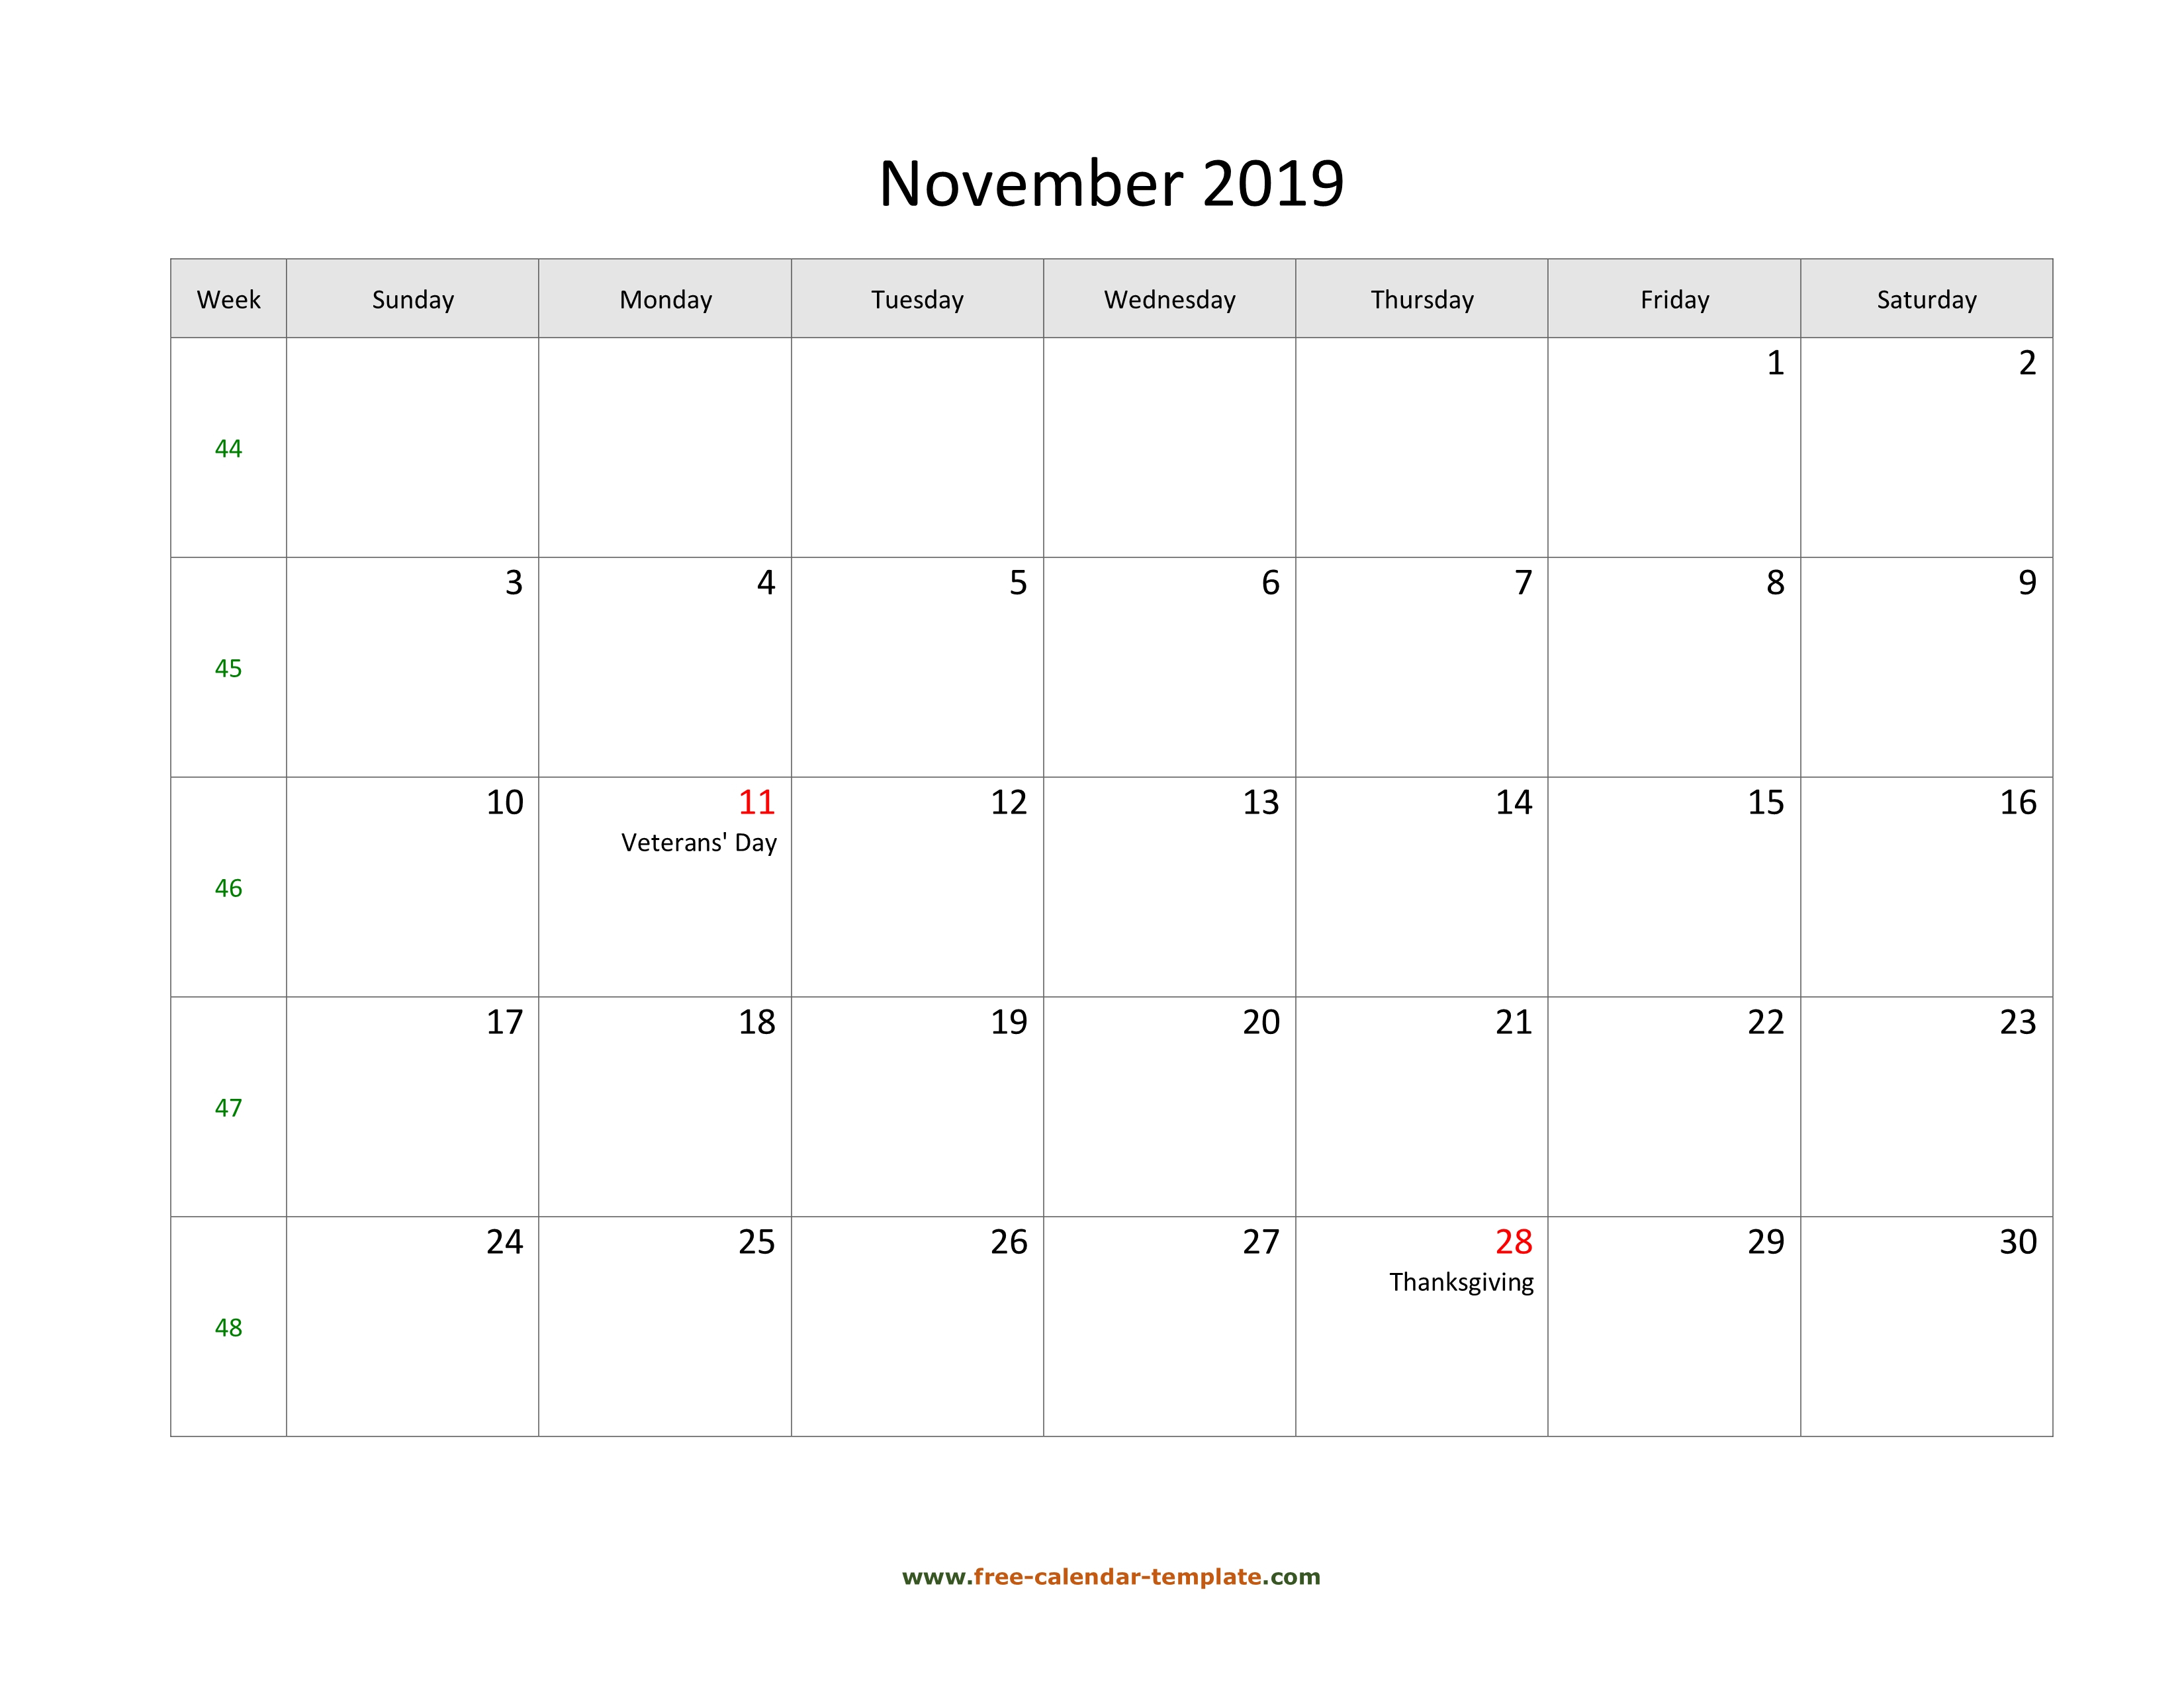 Free 2019 Calendar Blank November Template (Horizontal